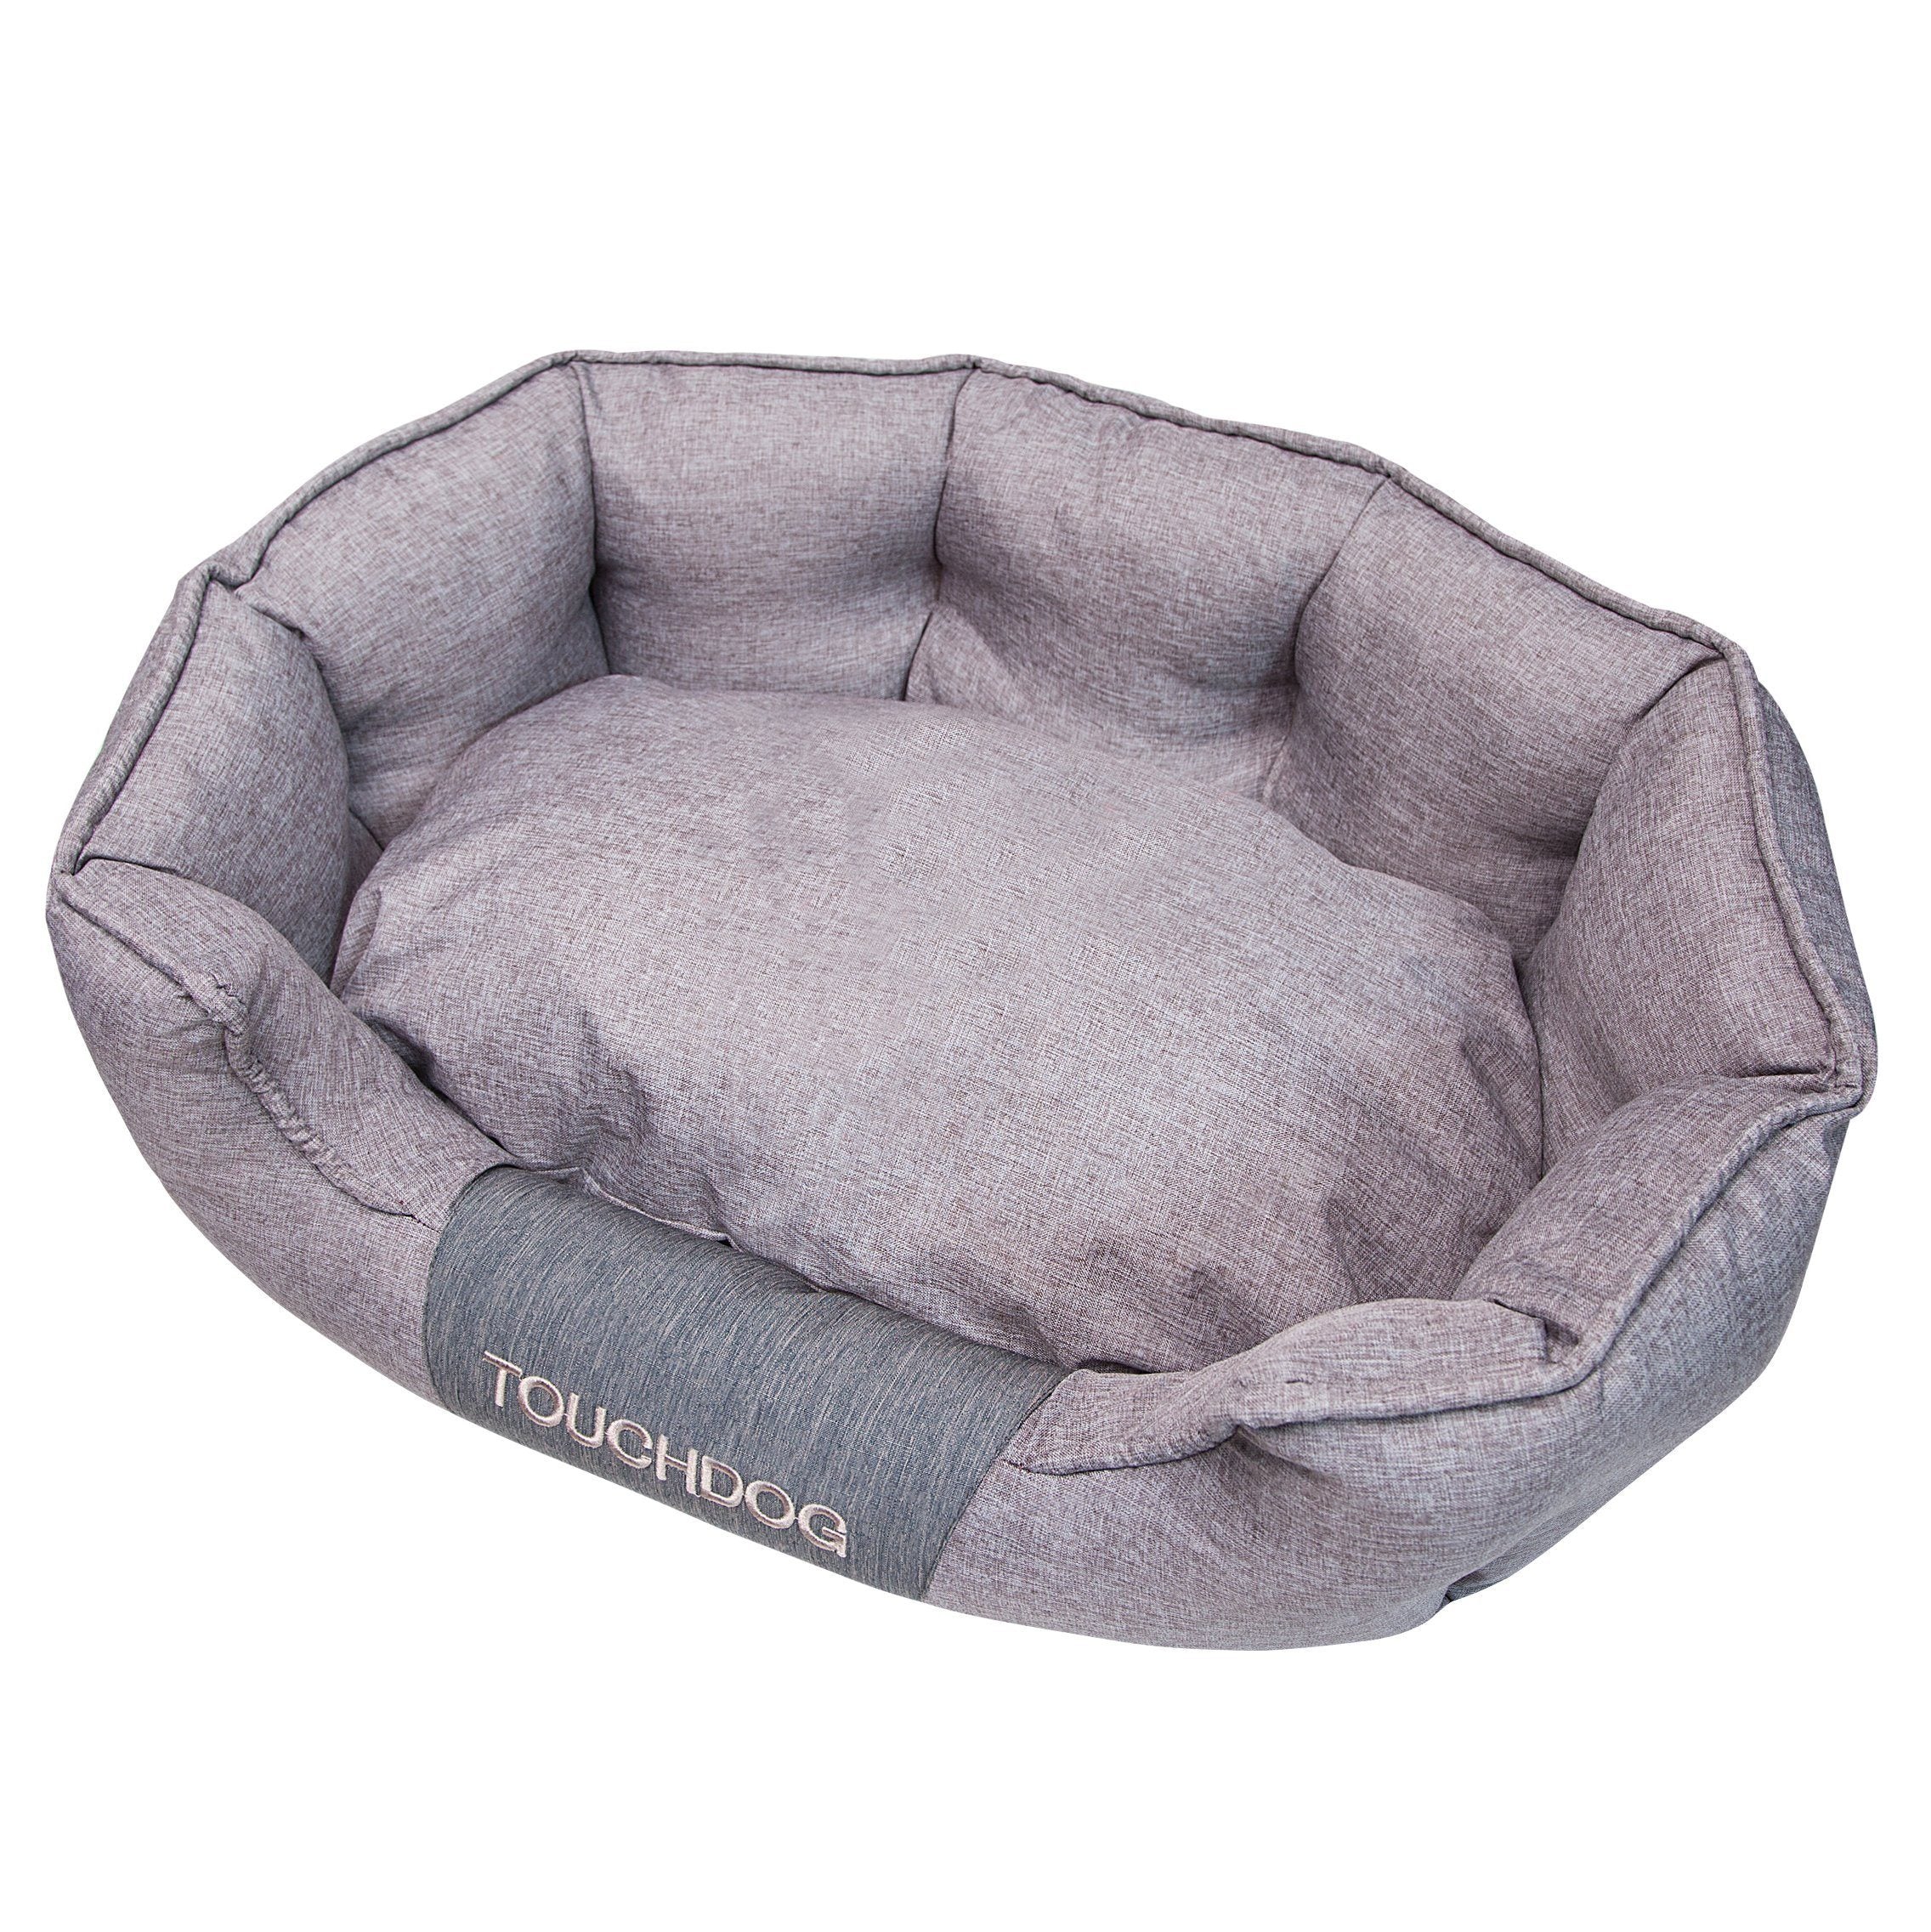 Touchdog 'Concept-Bark' Water-Resistant Premium Oval Dog Bed Medium Gray